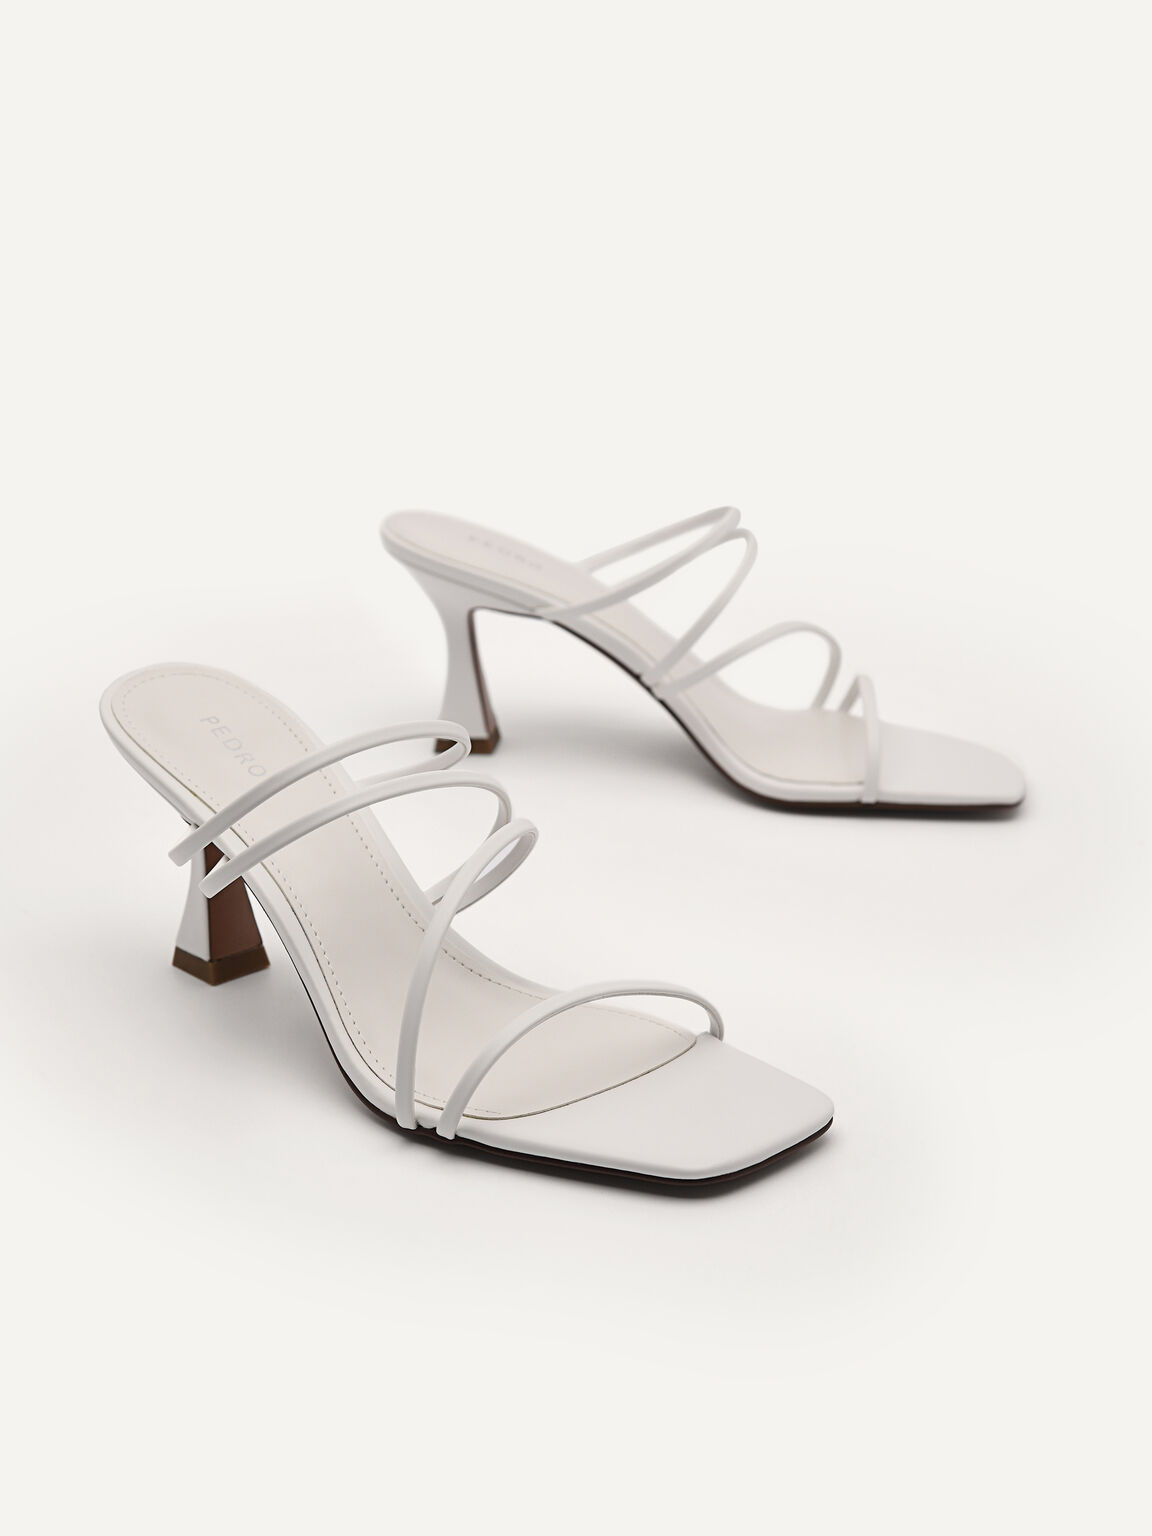 Strappy Heel Sandals - White, White, hi-res